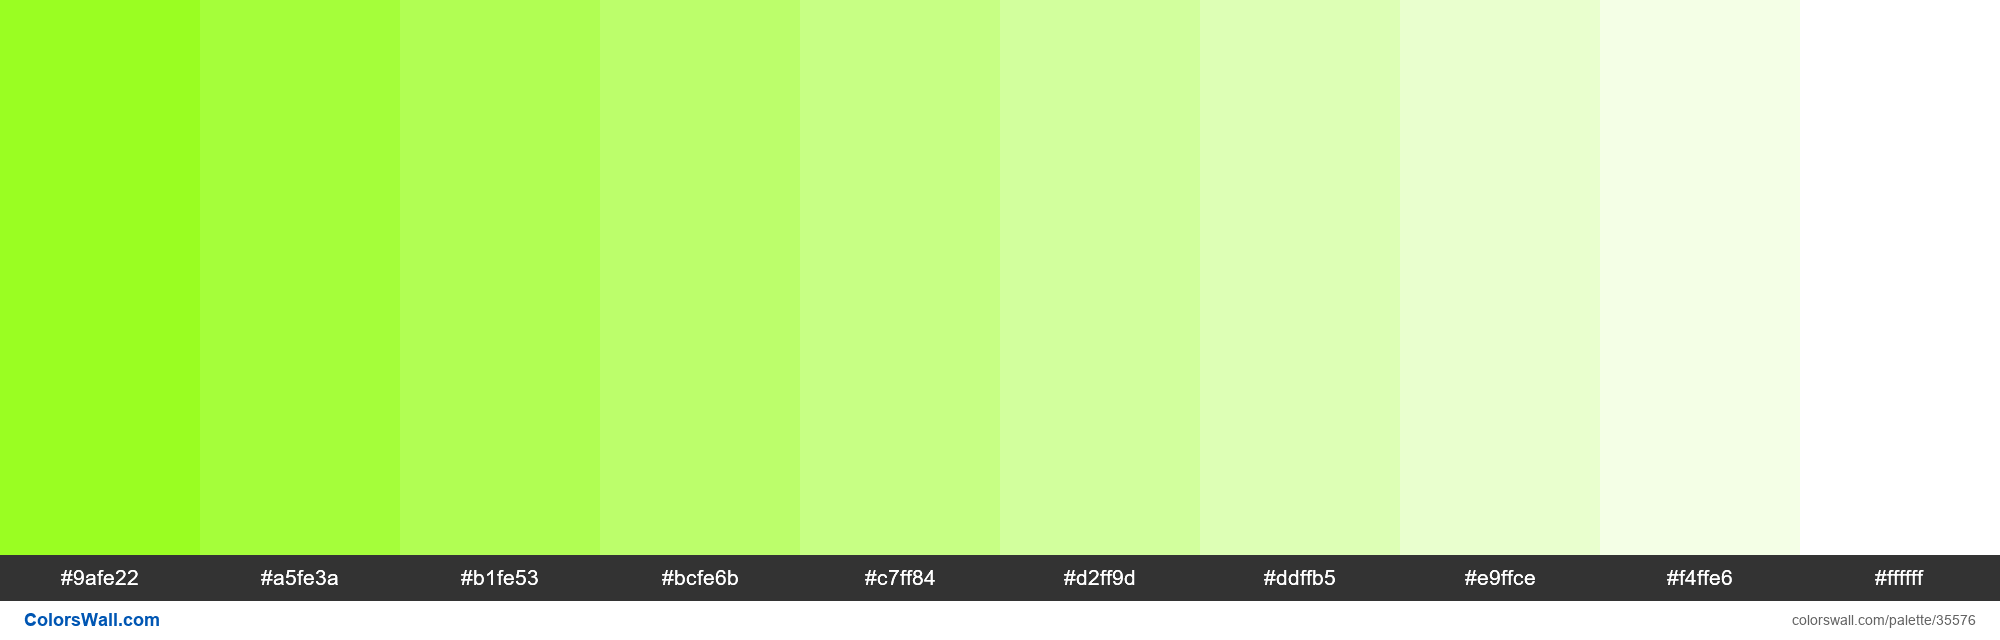 Tints XKCD Color acid green #8ffe09 hex colors palette - ColorsWall